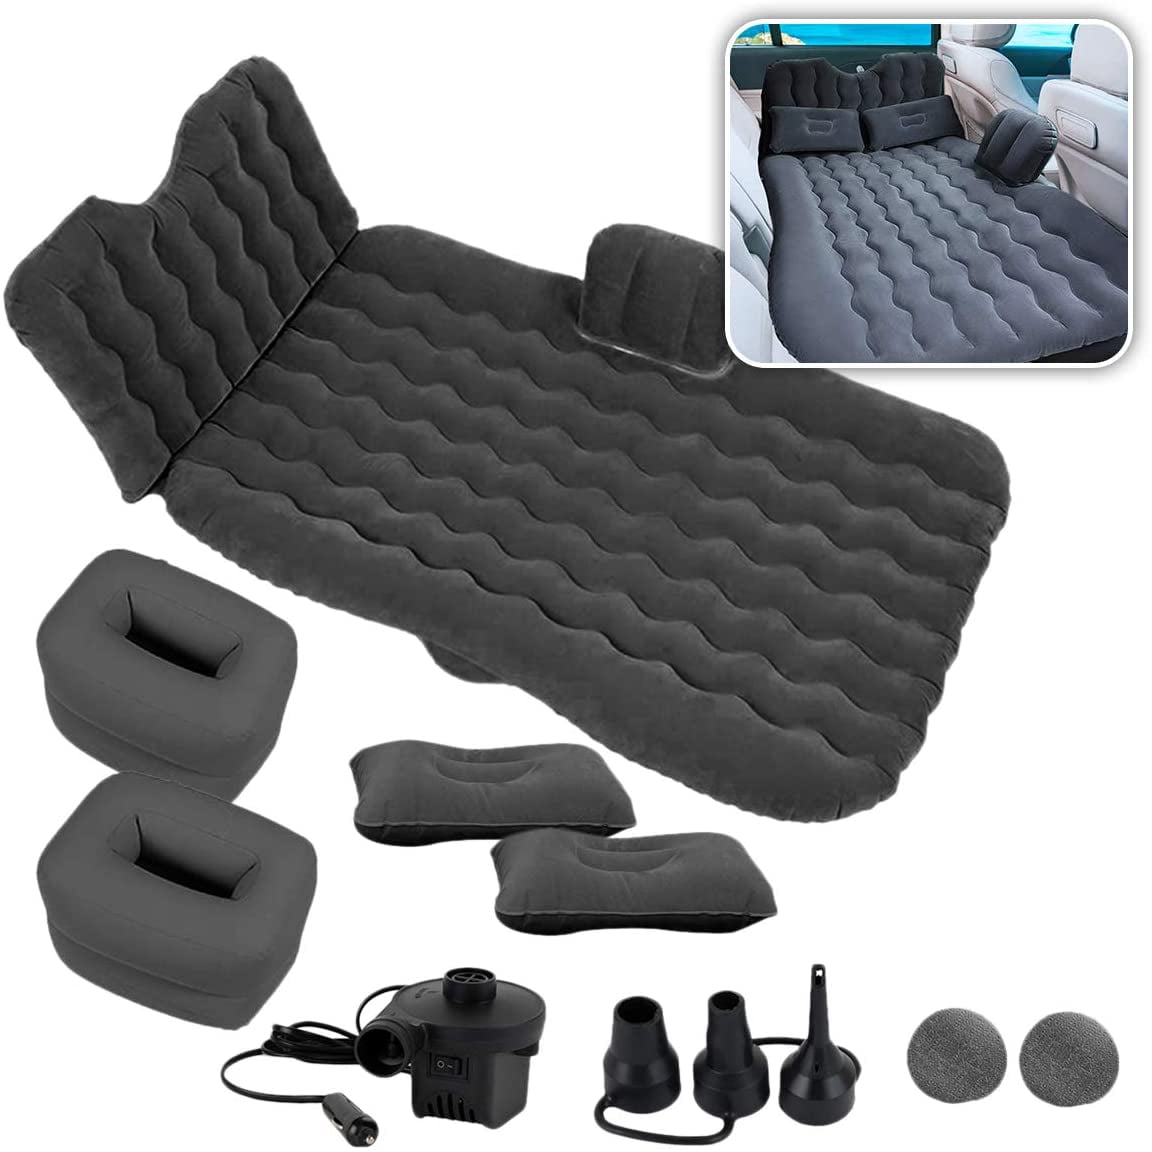 Pinty Inflatable Car Mattress Air Bed Cushion Universal Back Seat Mattress Travel with 2 Pillows /& Air Pump